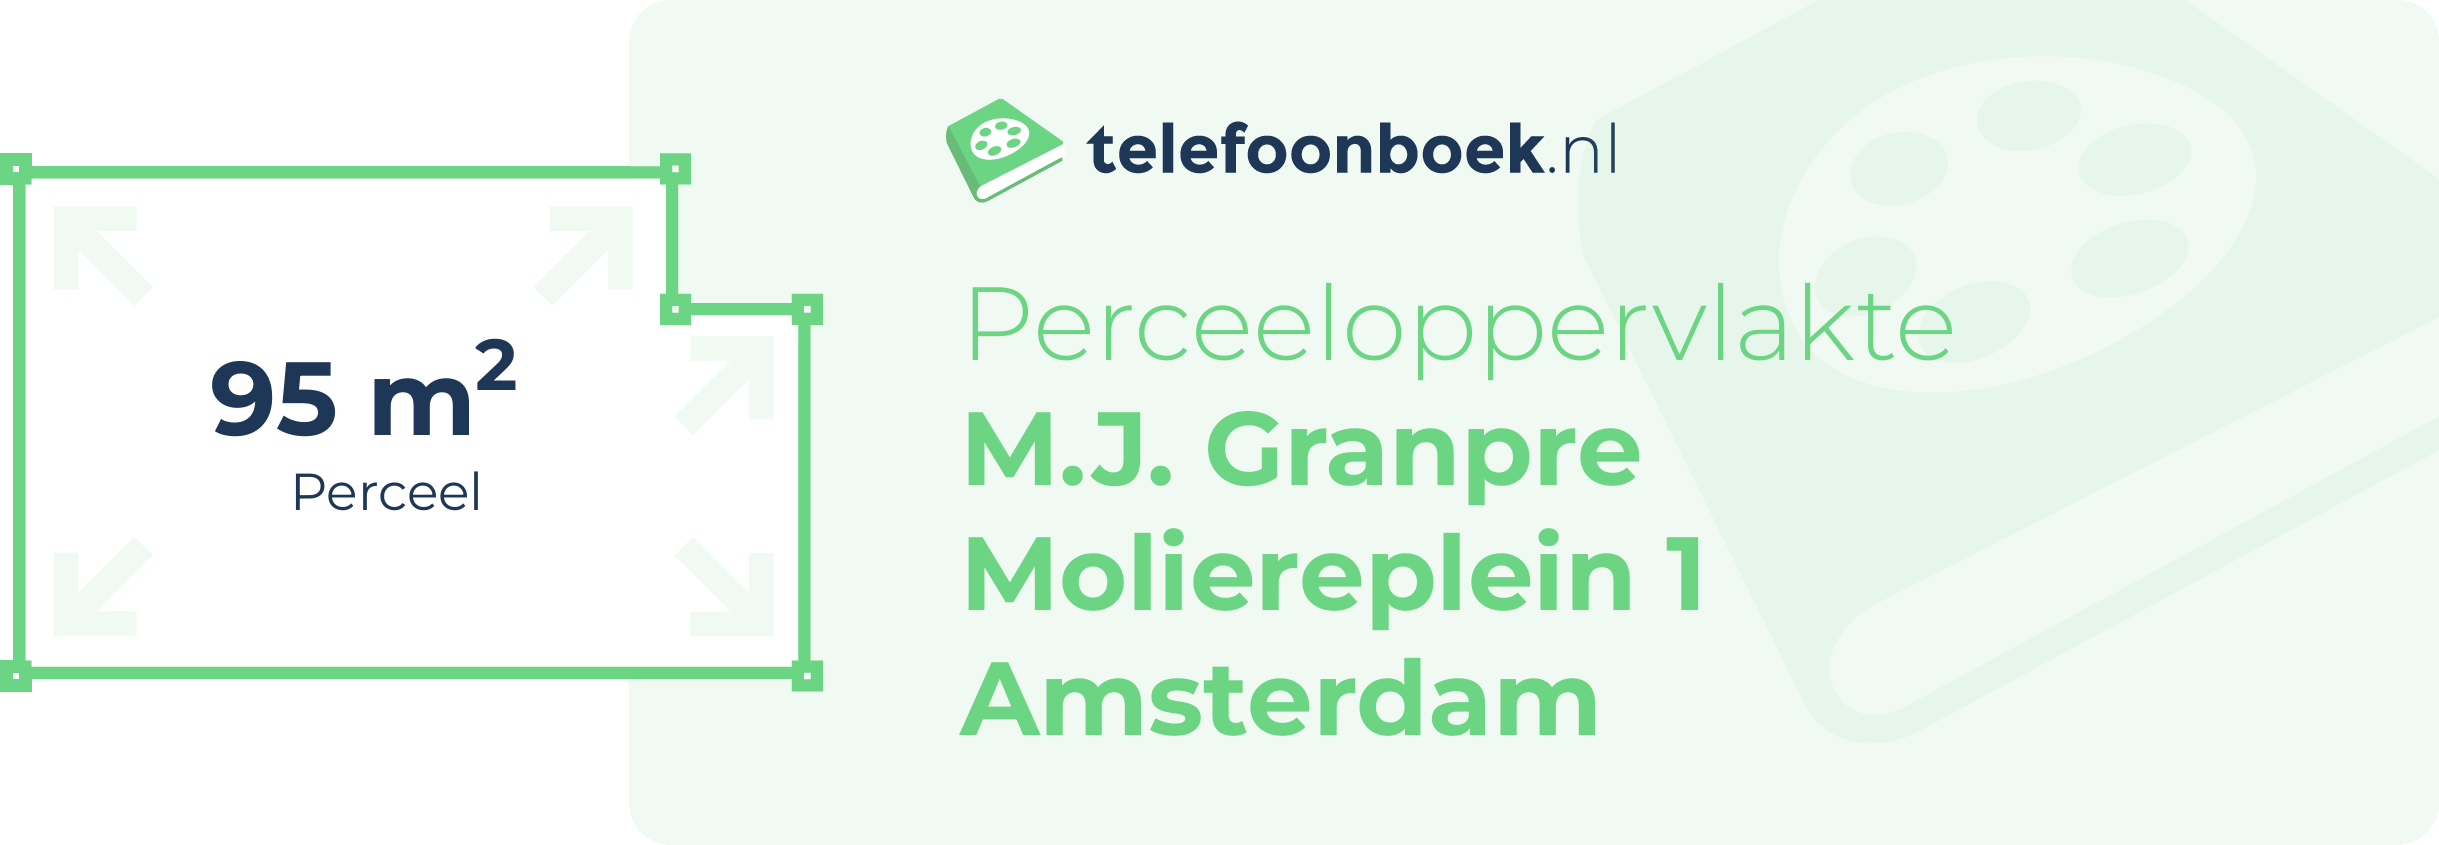 Perceeloppervlakte M.J. Granpre Moliereplein 1 Amsterdam